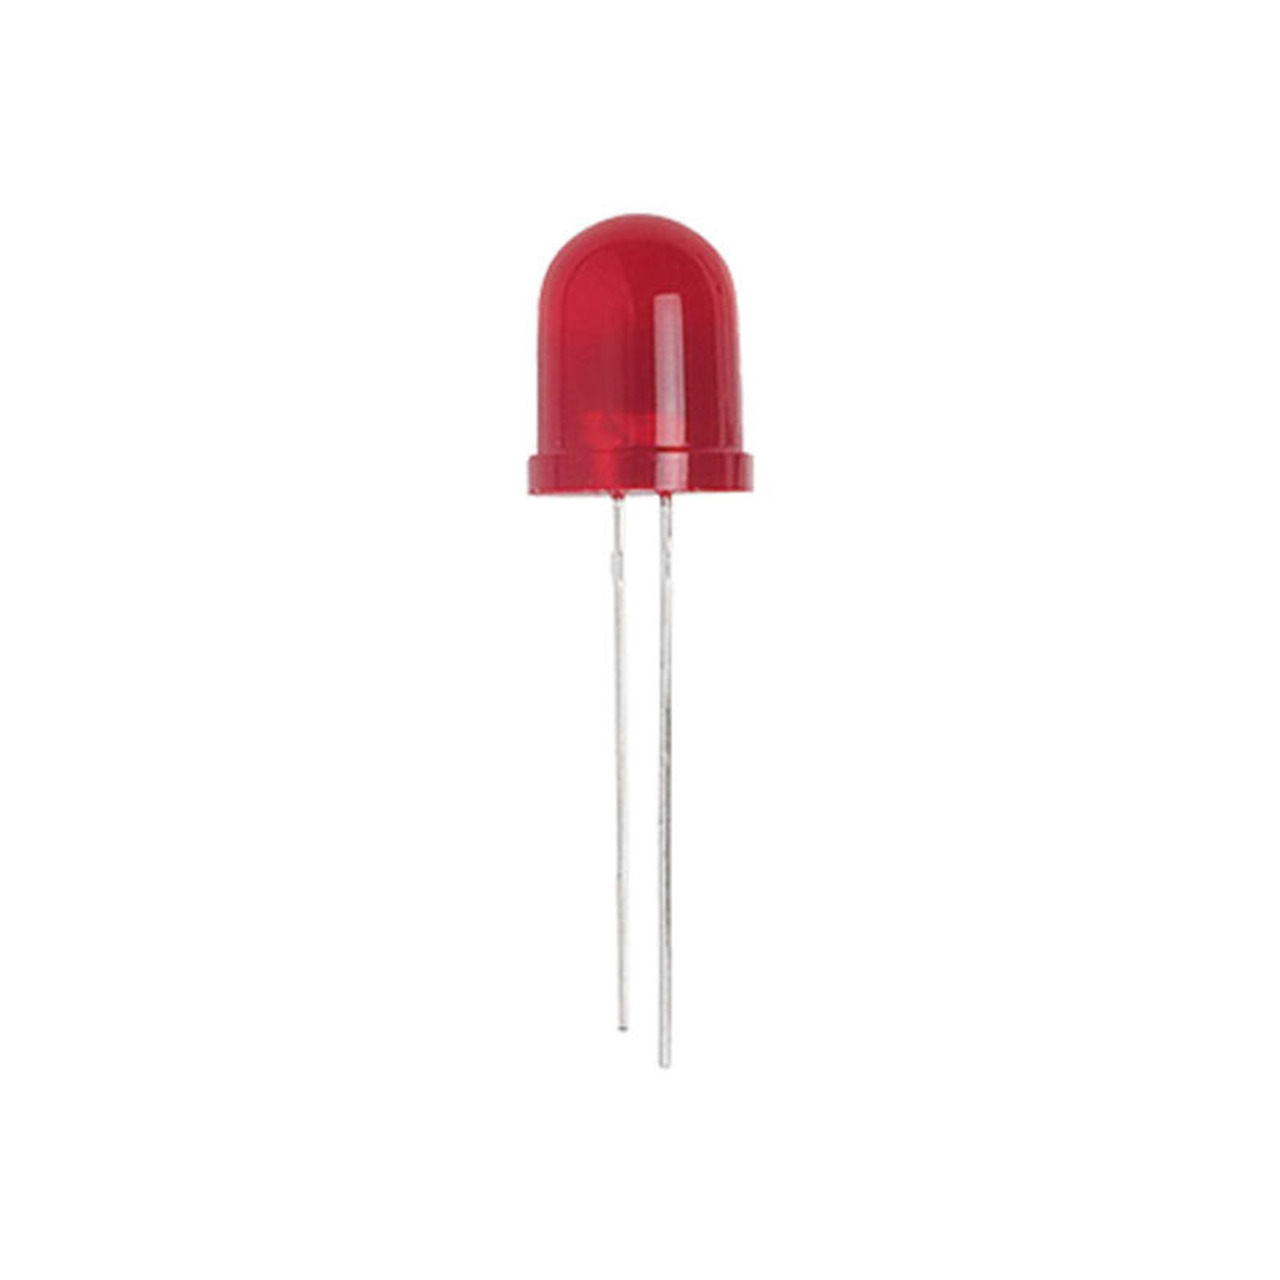 Superhelle LED 10 mm Rot unter Komponenten